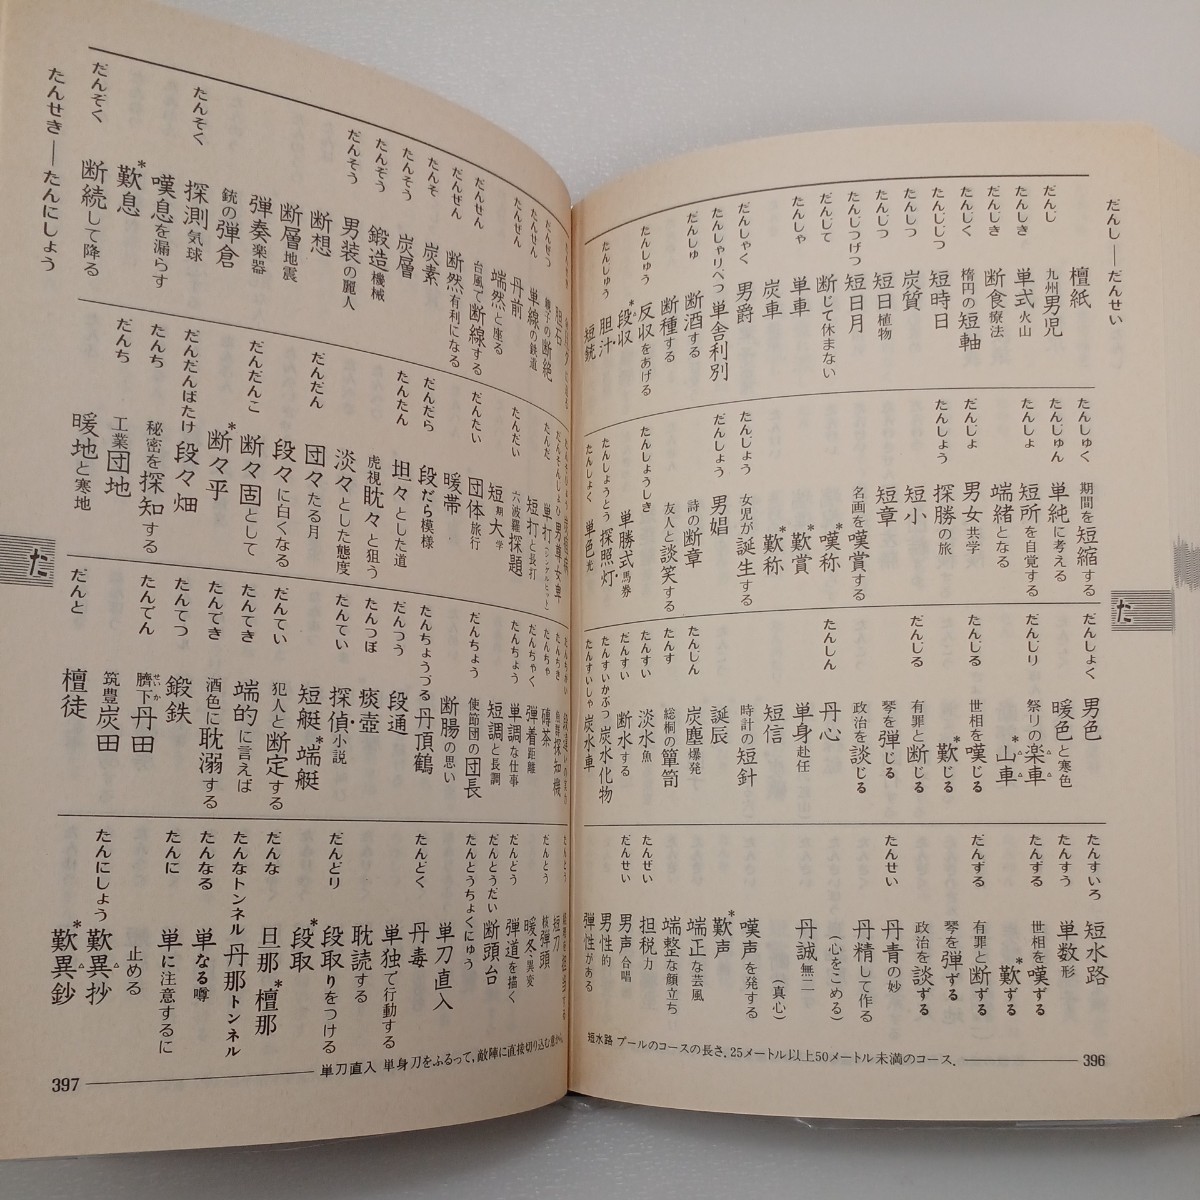 zaa-546♪大きな活字の漢字表記辞典 特装版 　 三省堂編集所 (編) 三省堂 (1993年)